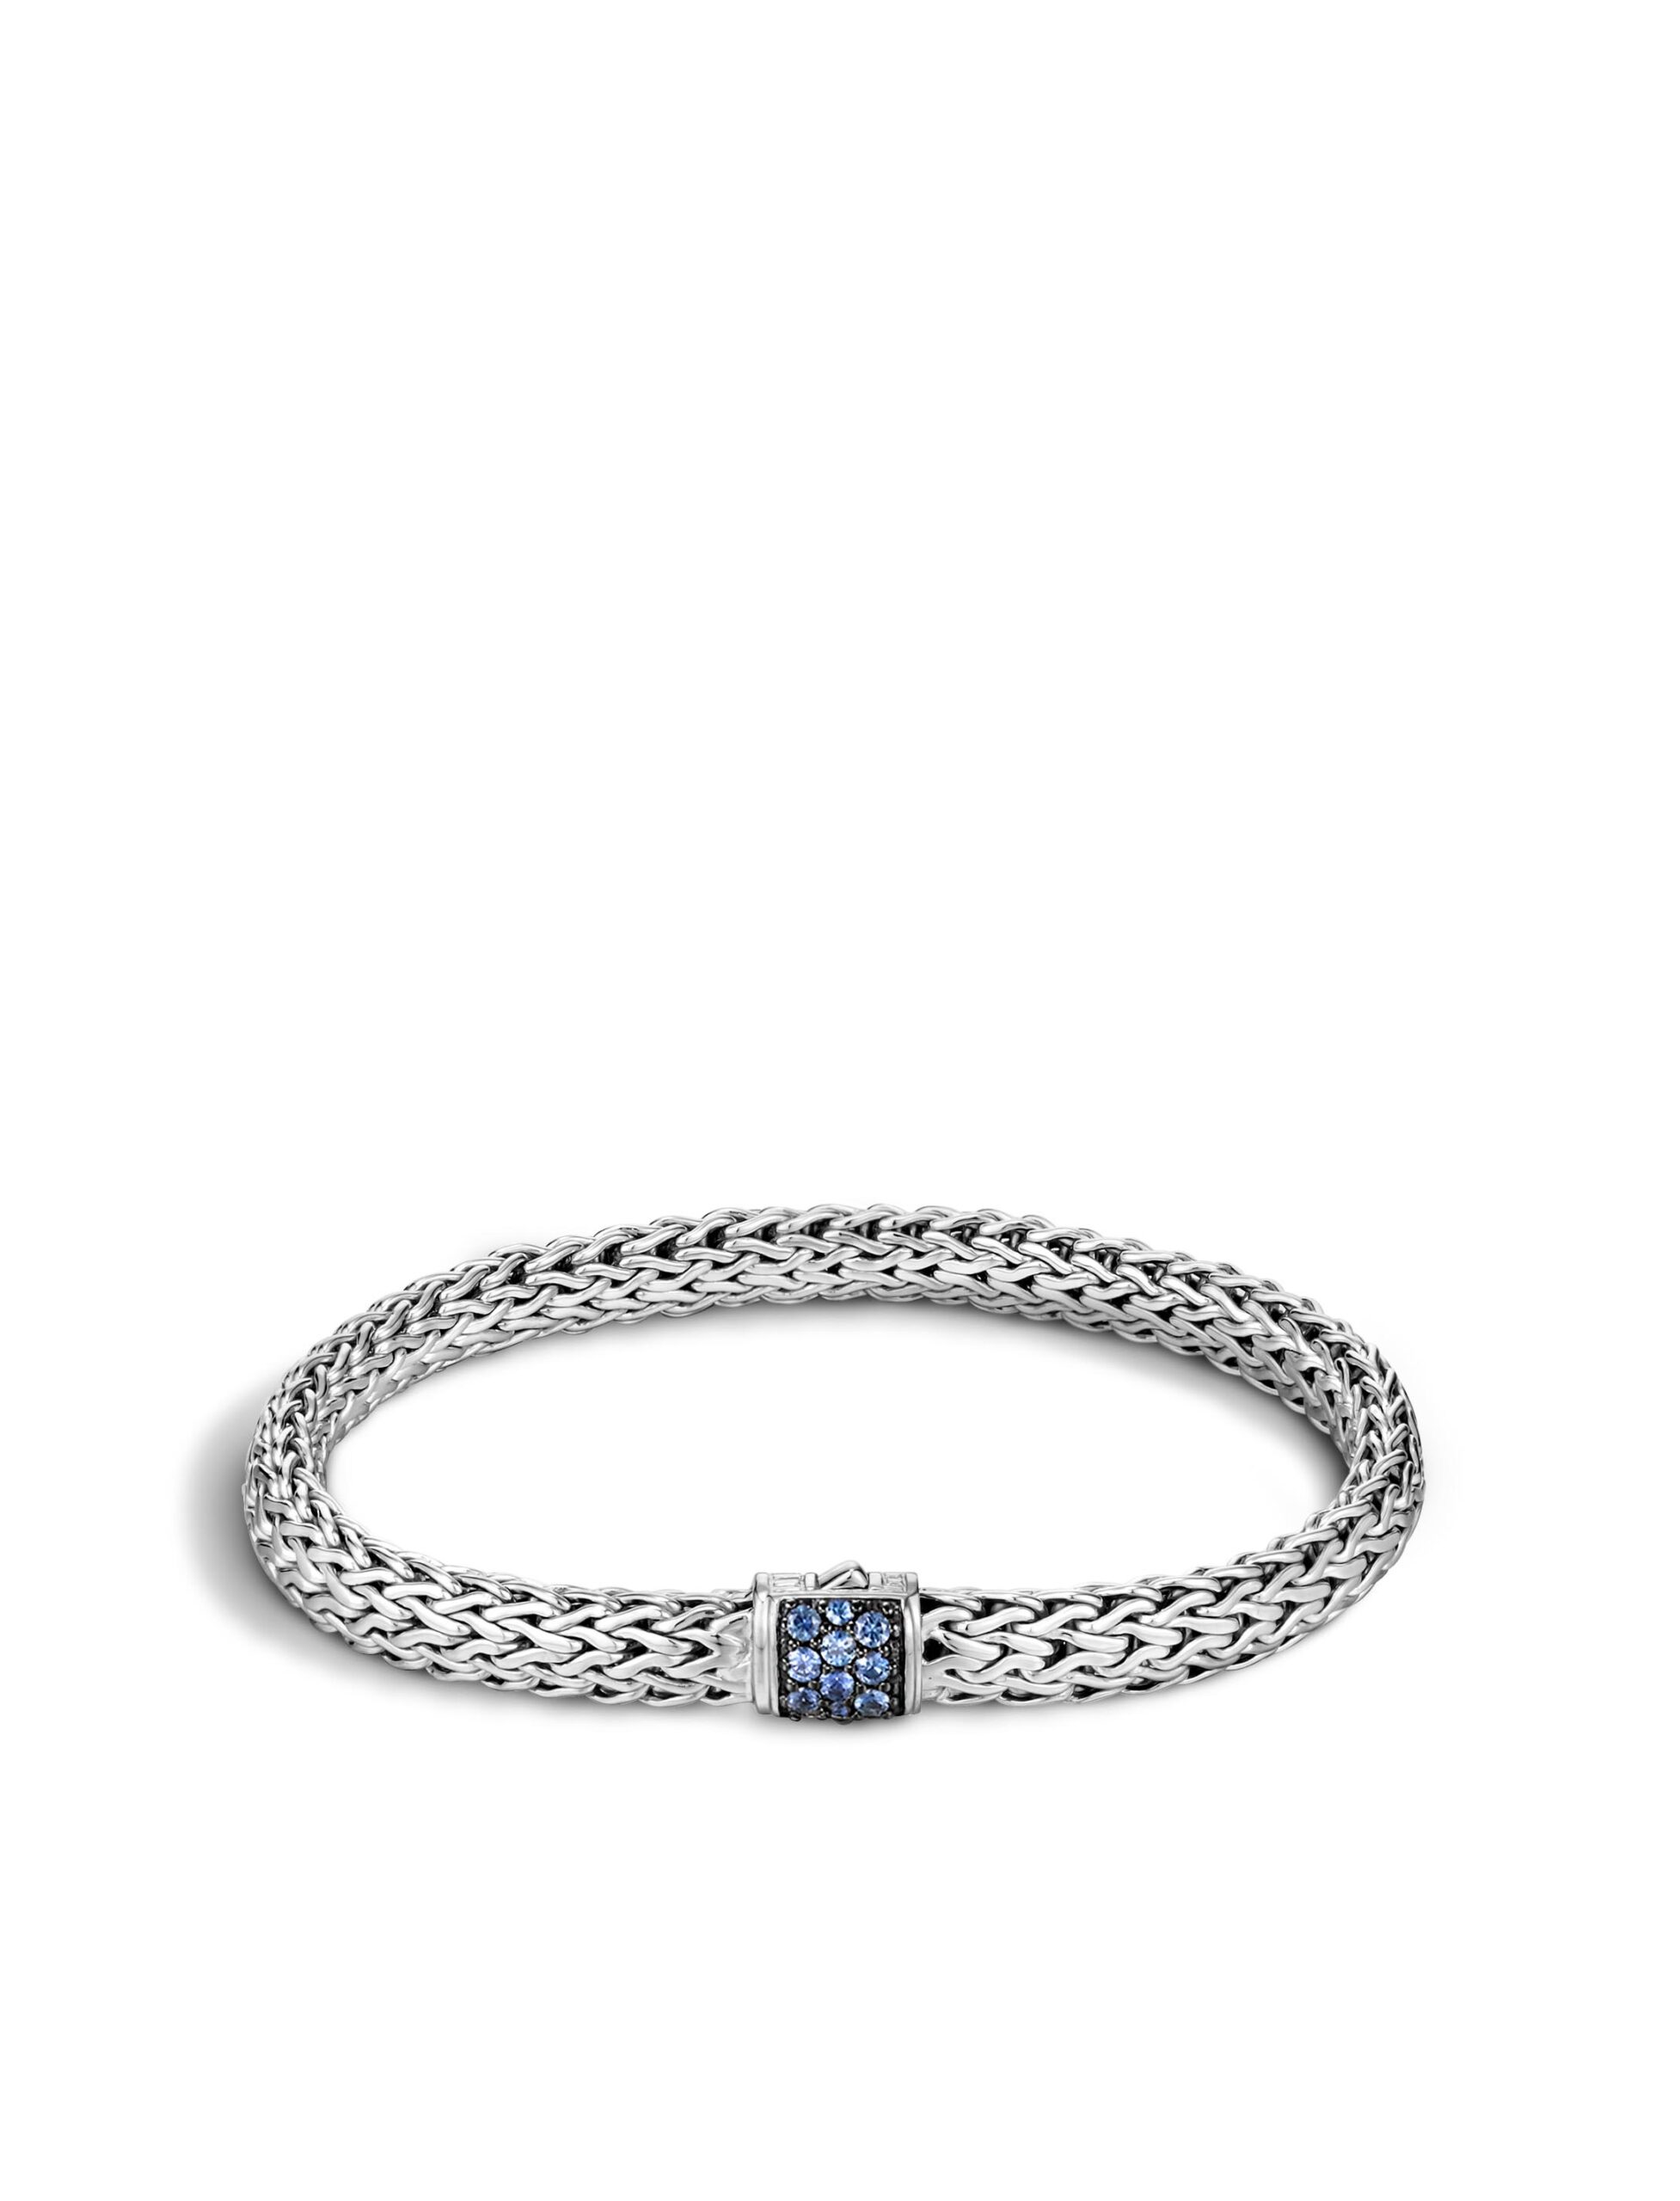 463897Large-Lava-Blue-Sapphire-Bracelet.jpg.jpg